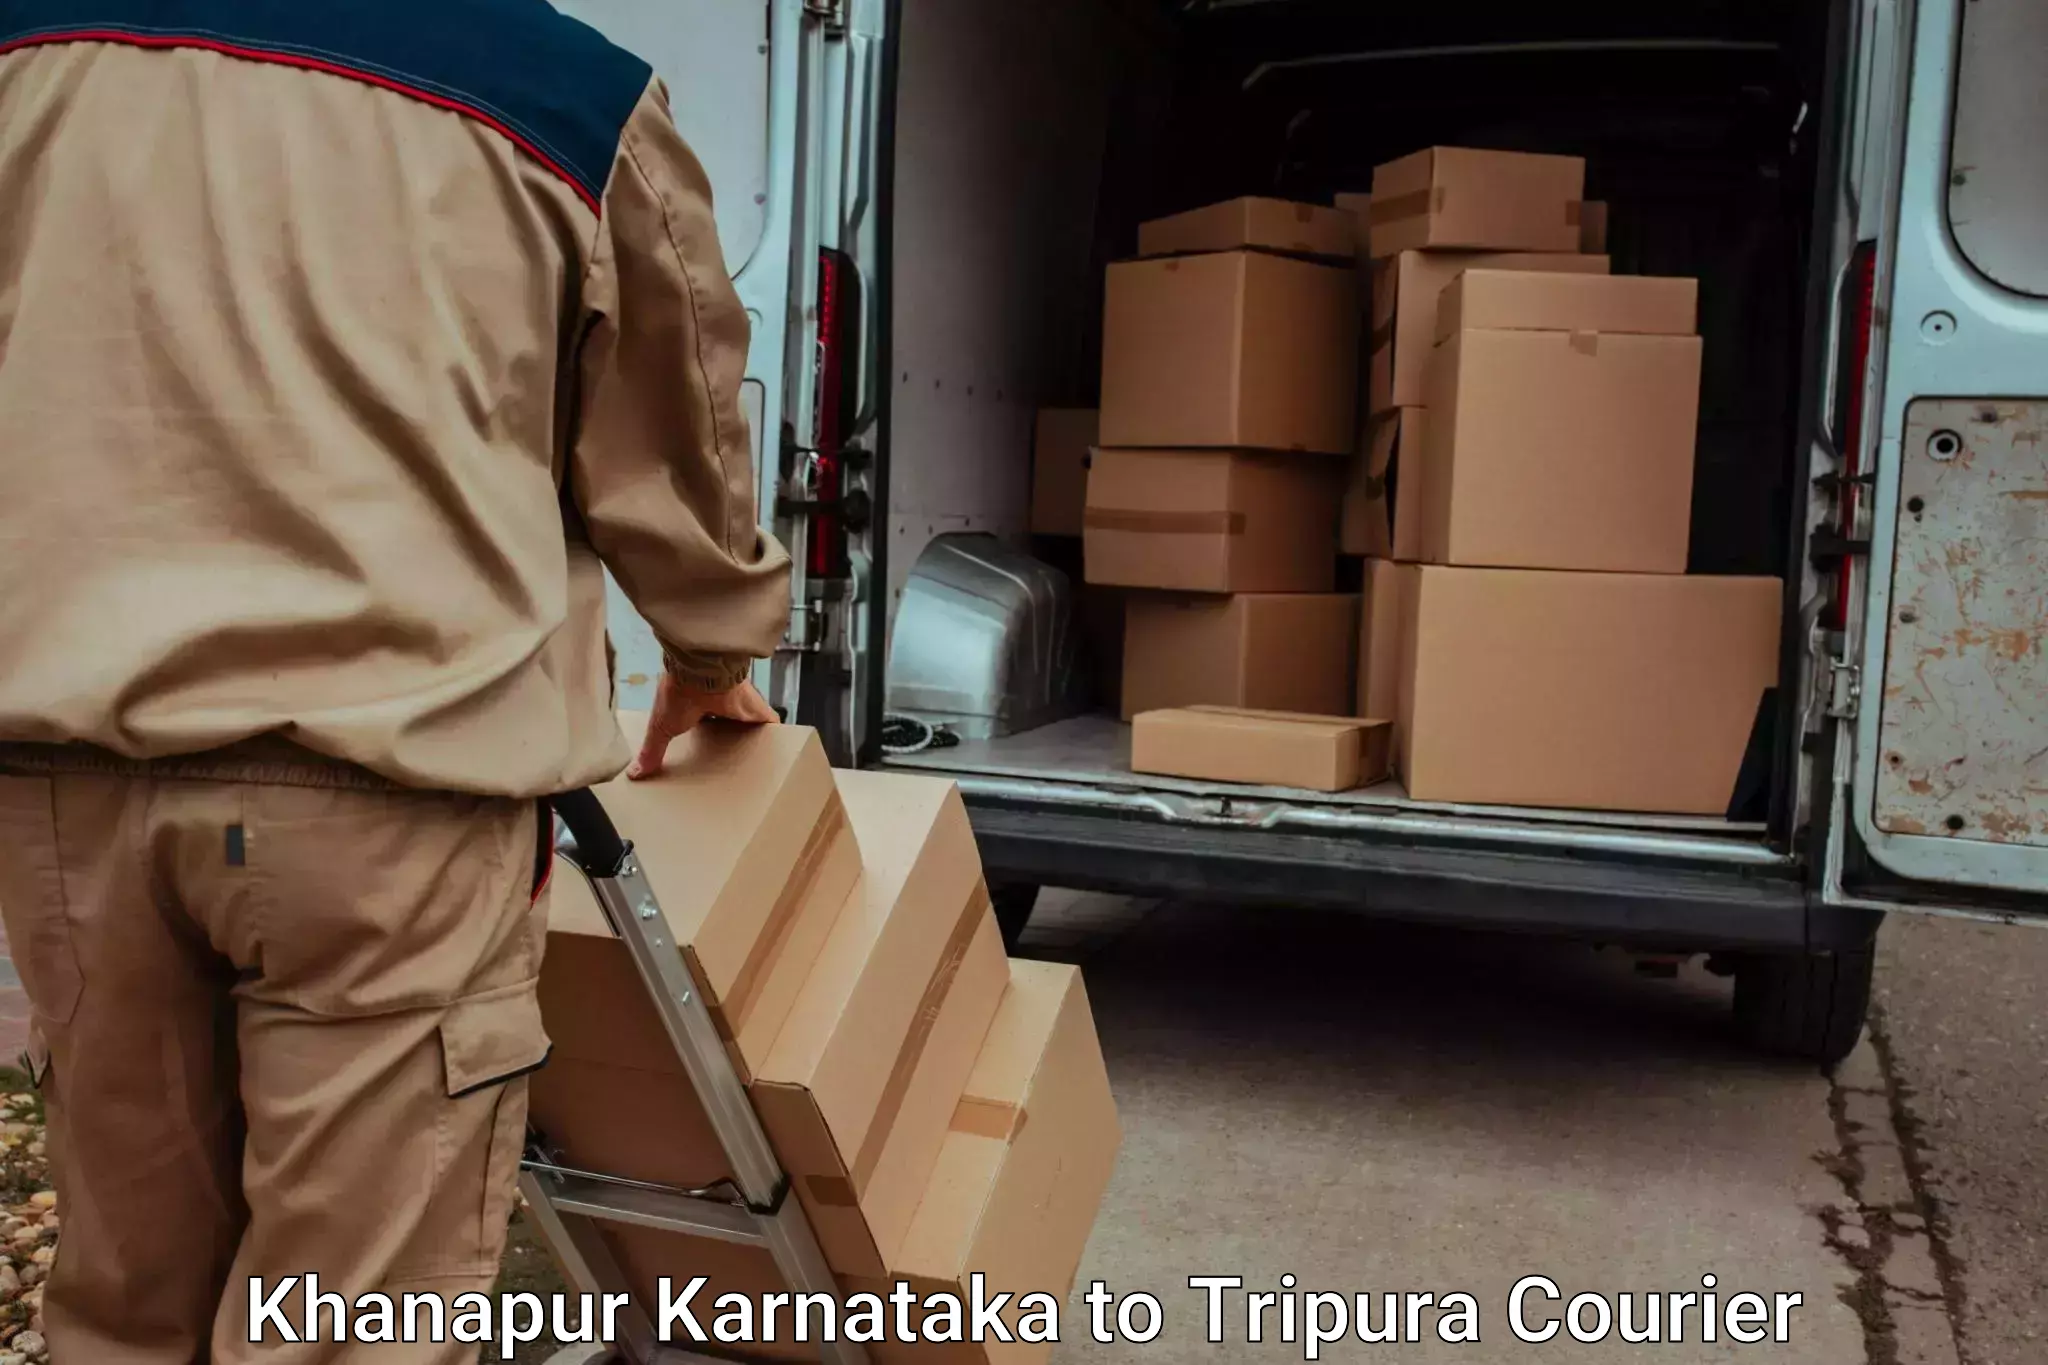 Door-to-door baggage service Khanapur Karnataka to South Tripura